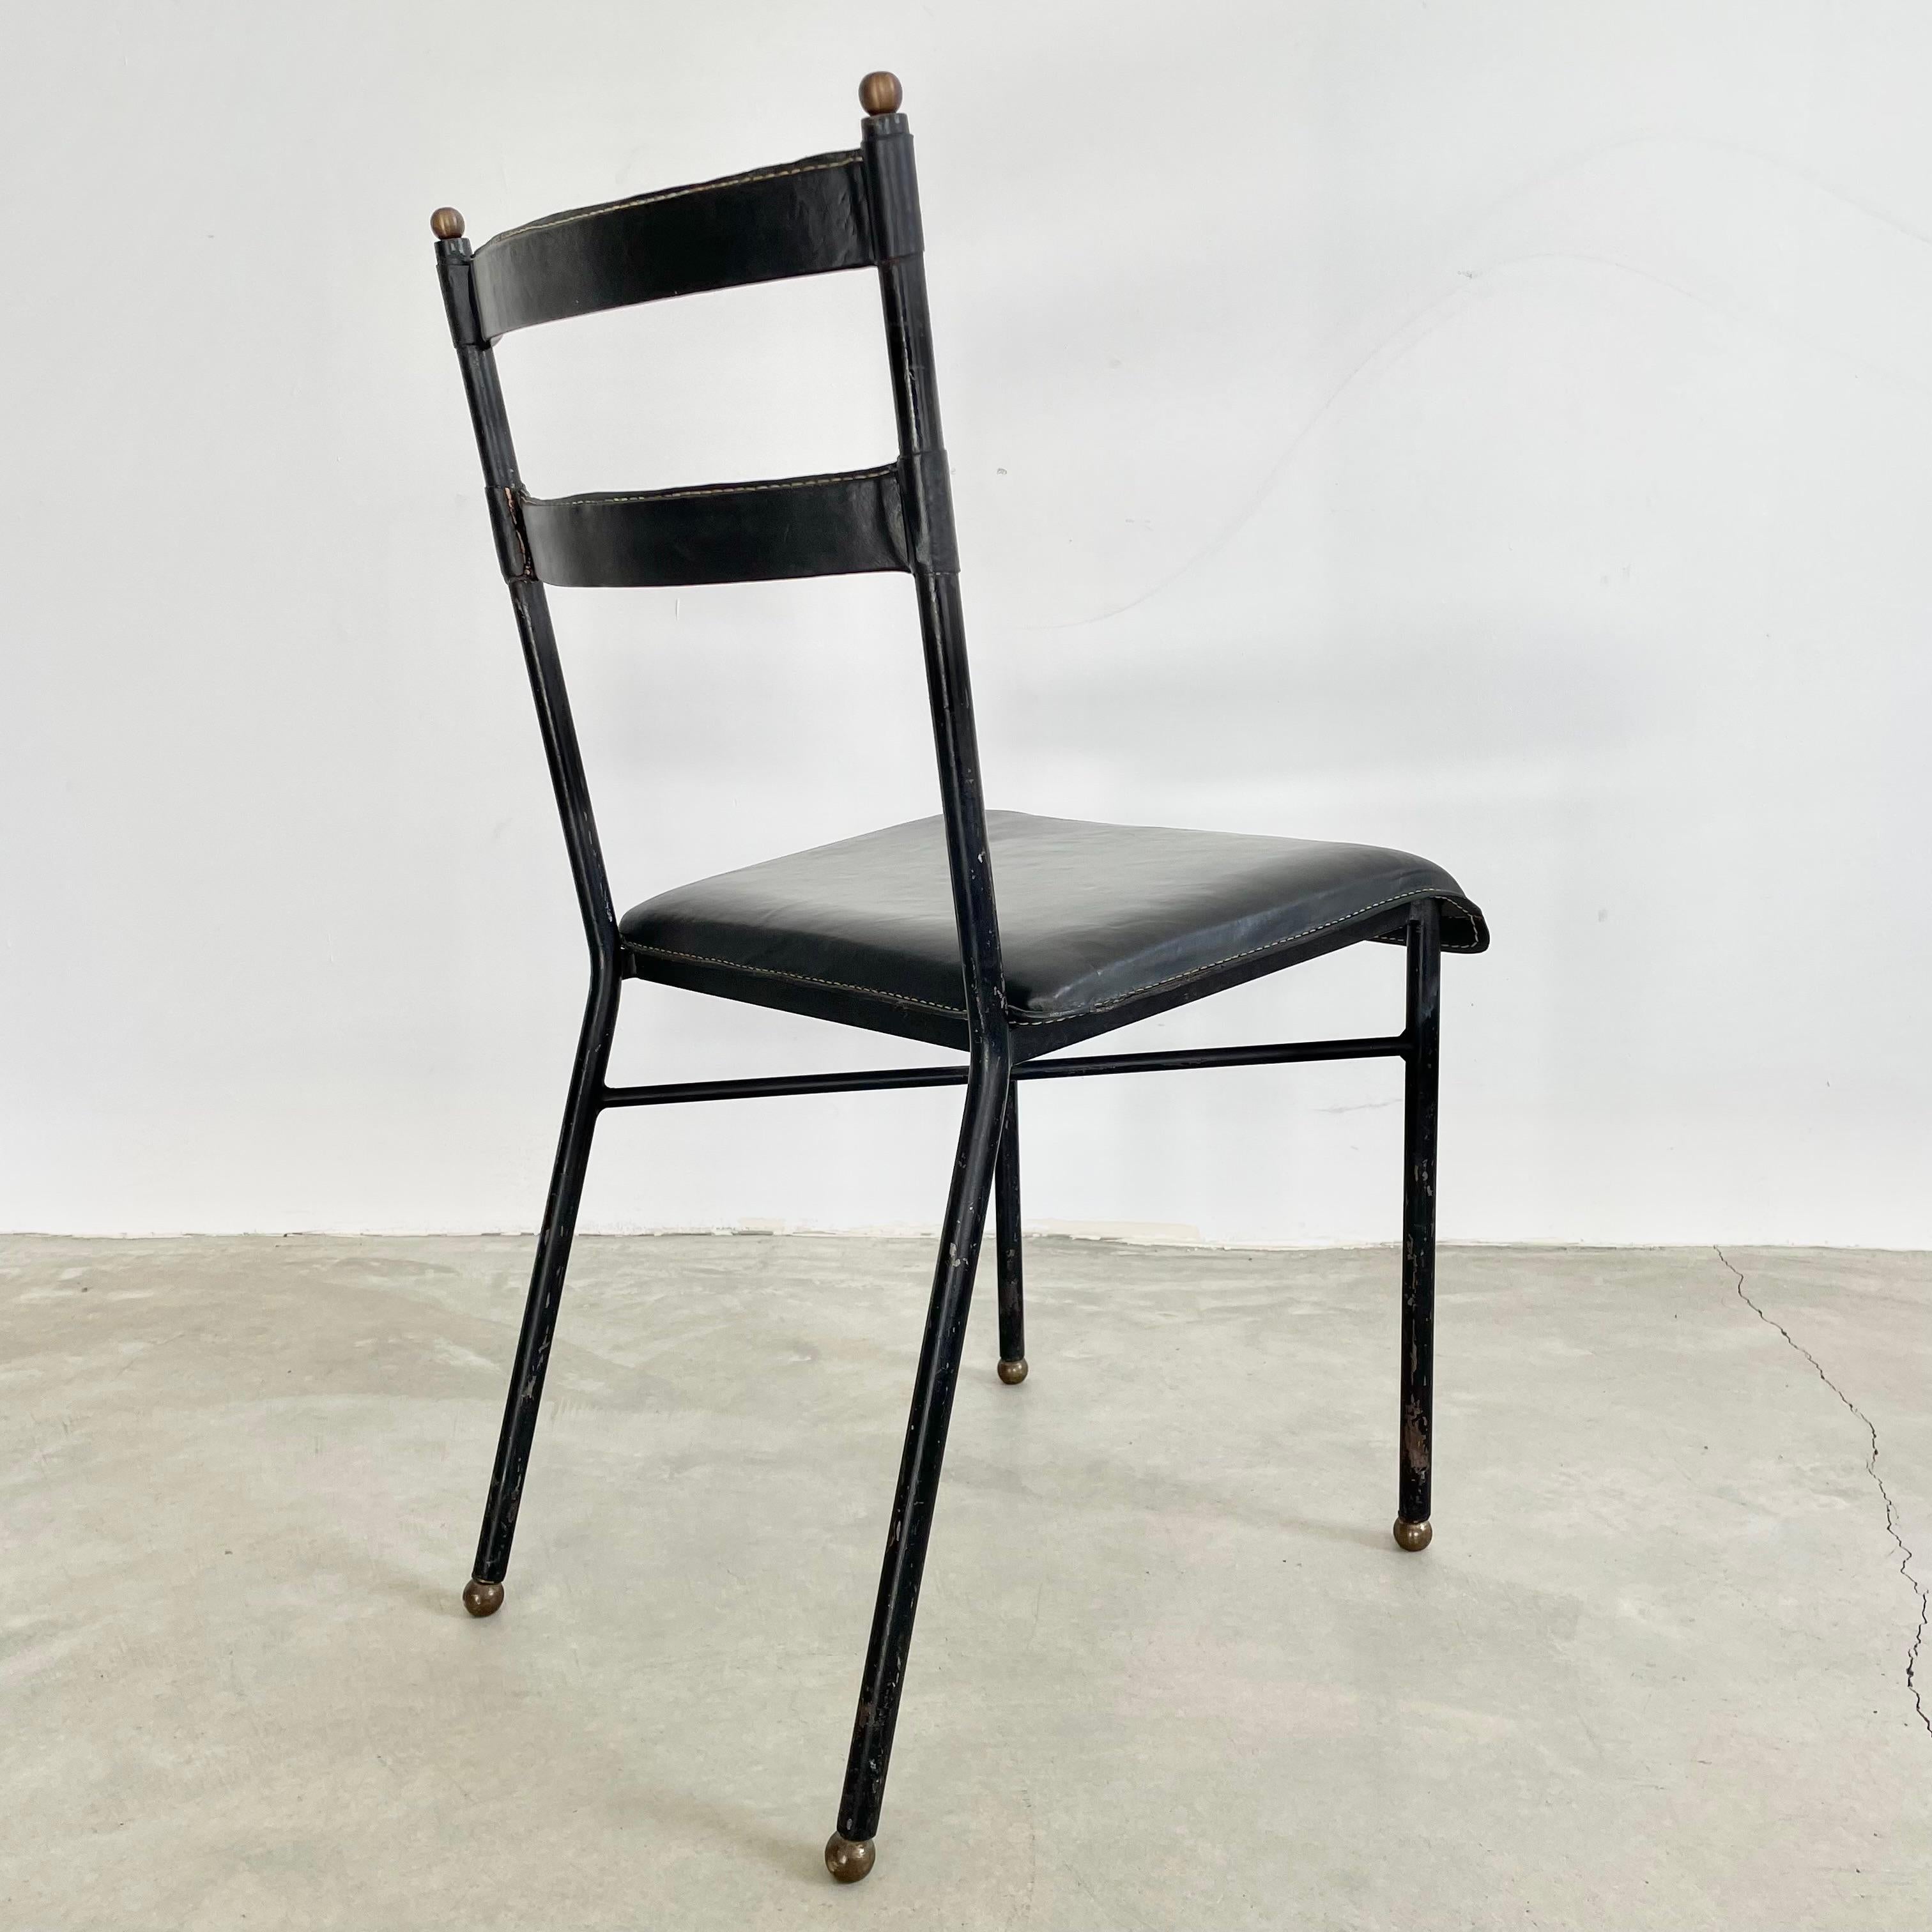 Jacques Adnet, Stuhl aus schwarzem Leder, 1950er-Jahre, Frankreich (Mitte des 20. Jahrhunderts) im Angebot